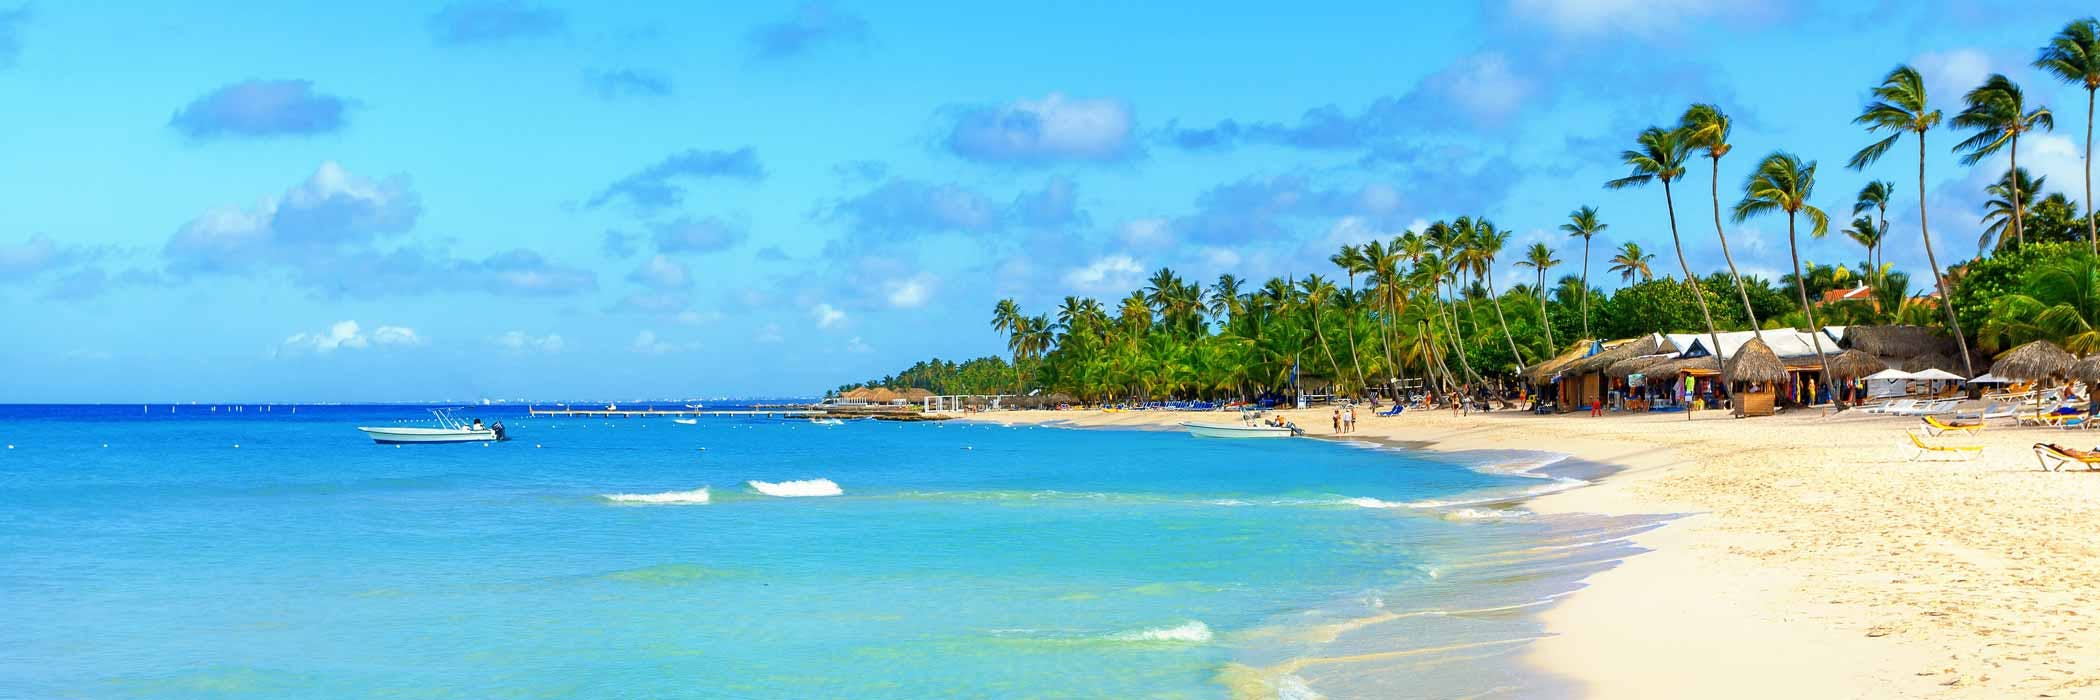 Picture of Dominican Republic